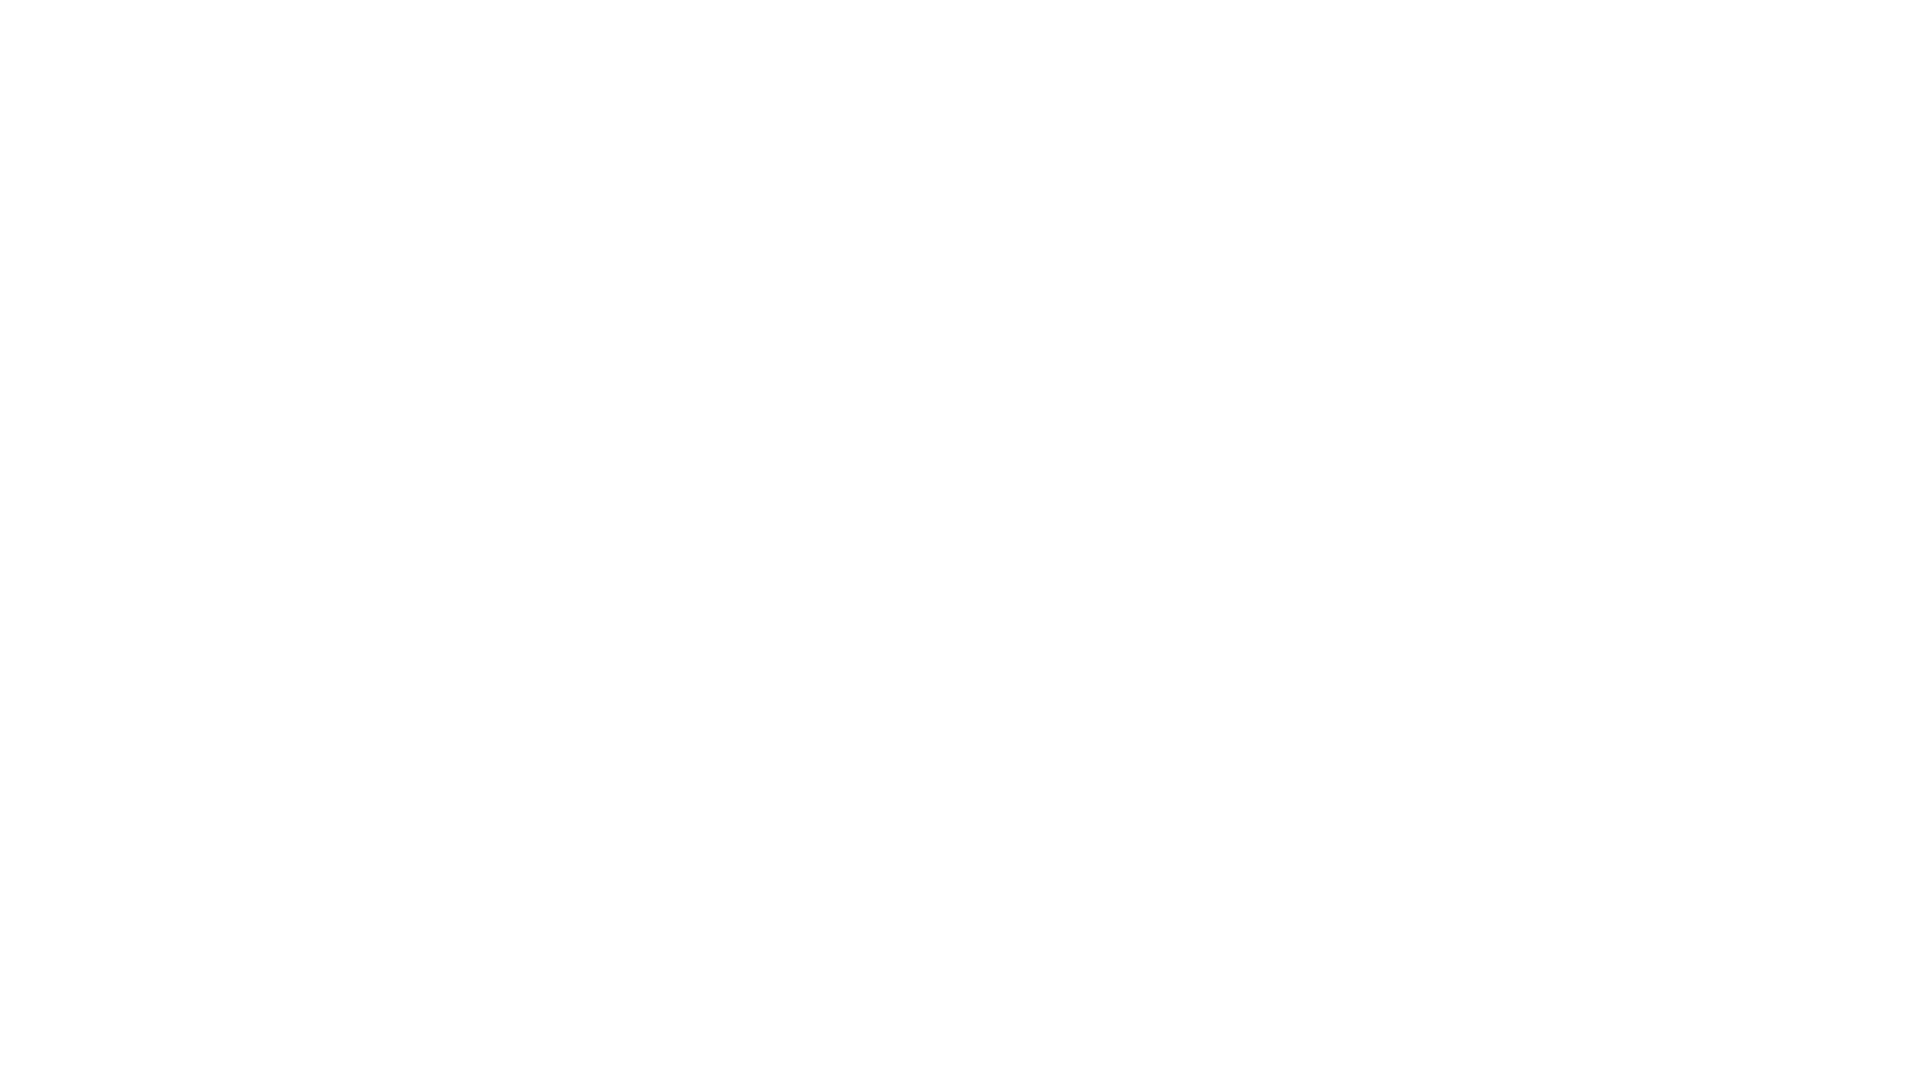 Kingdom of heaven full movie